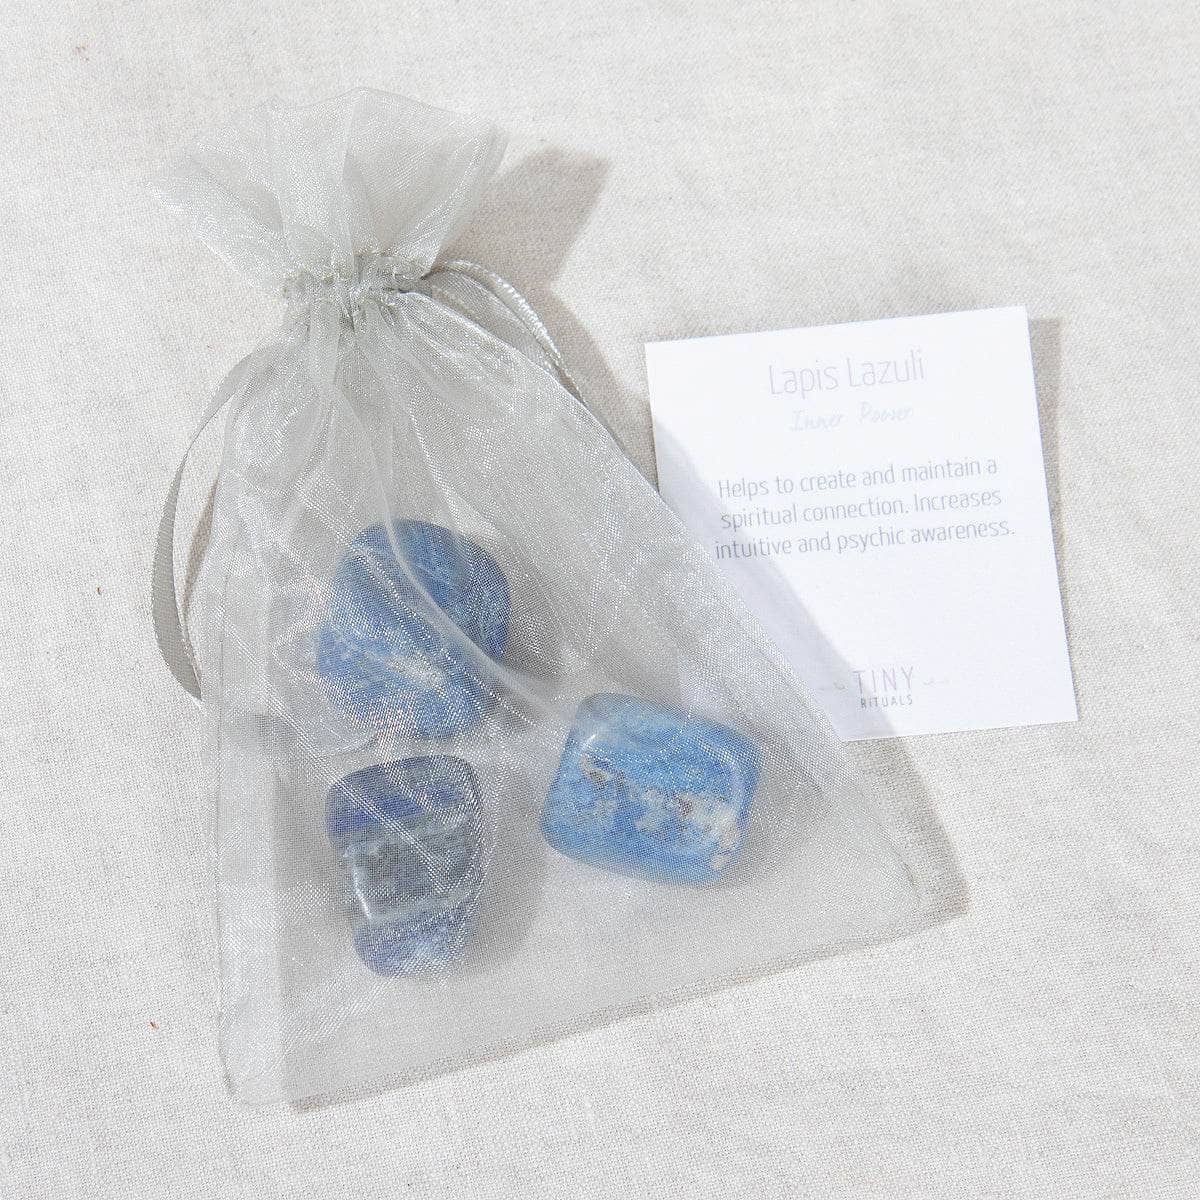 Lapis Lazuli Stone Set by Tiny Rituals